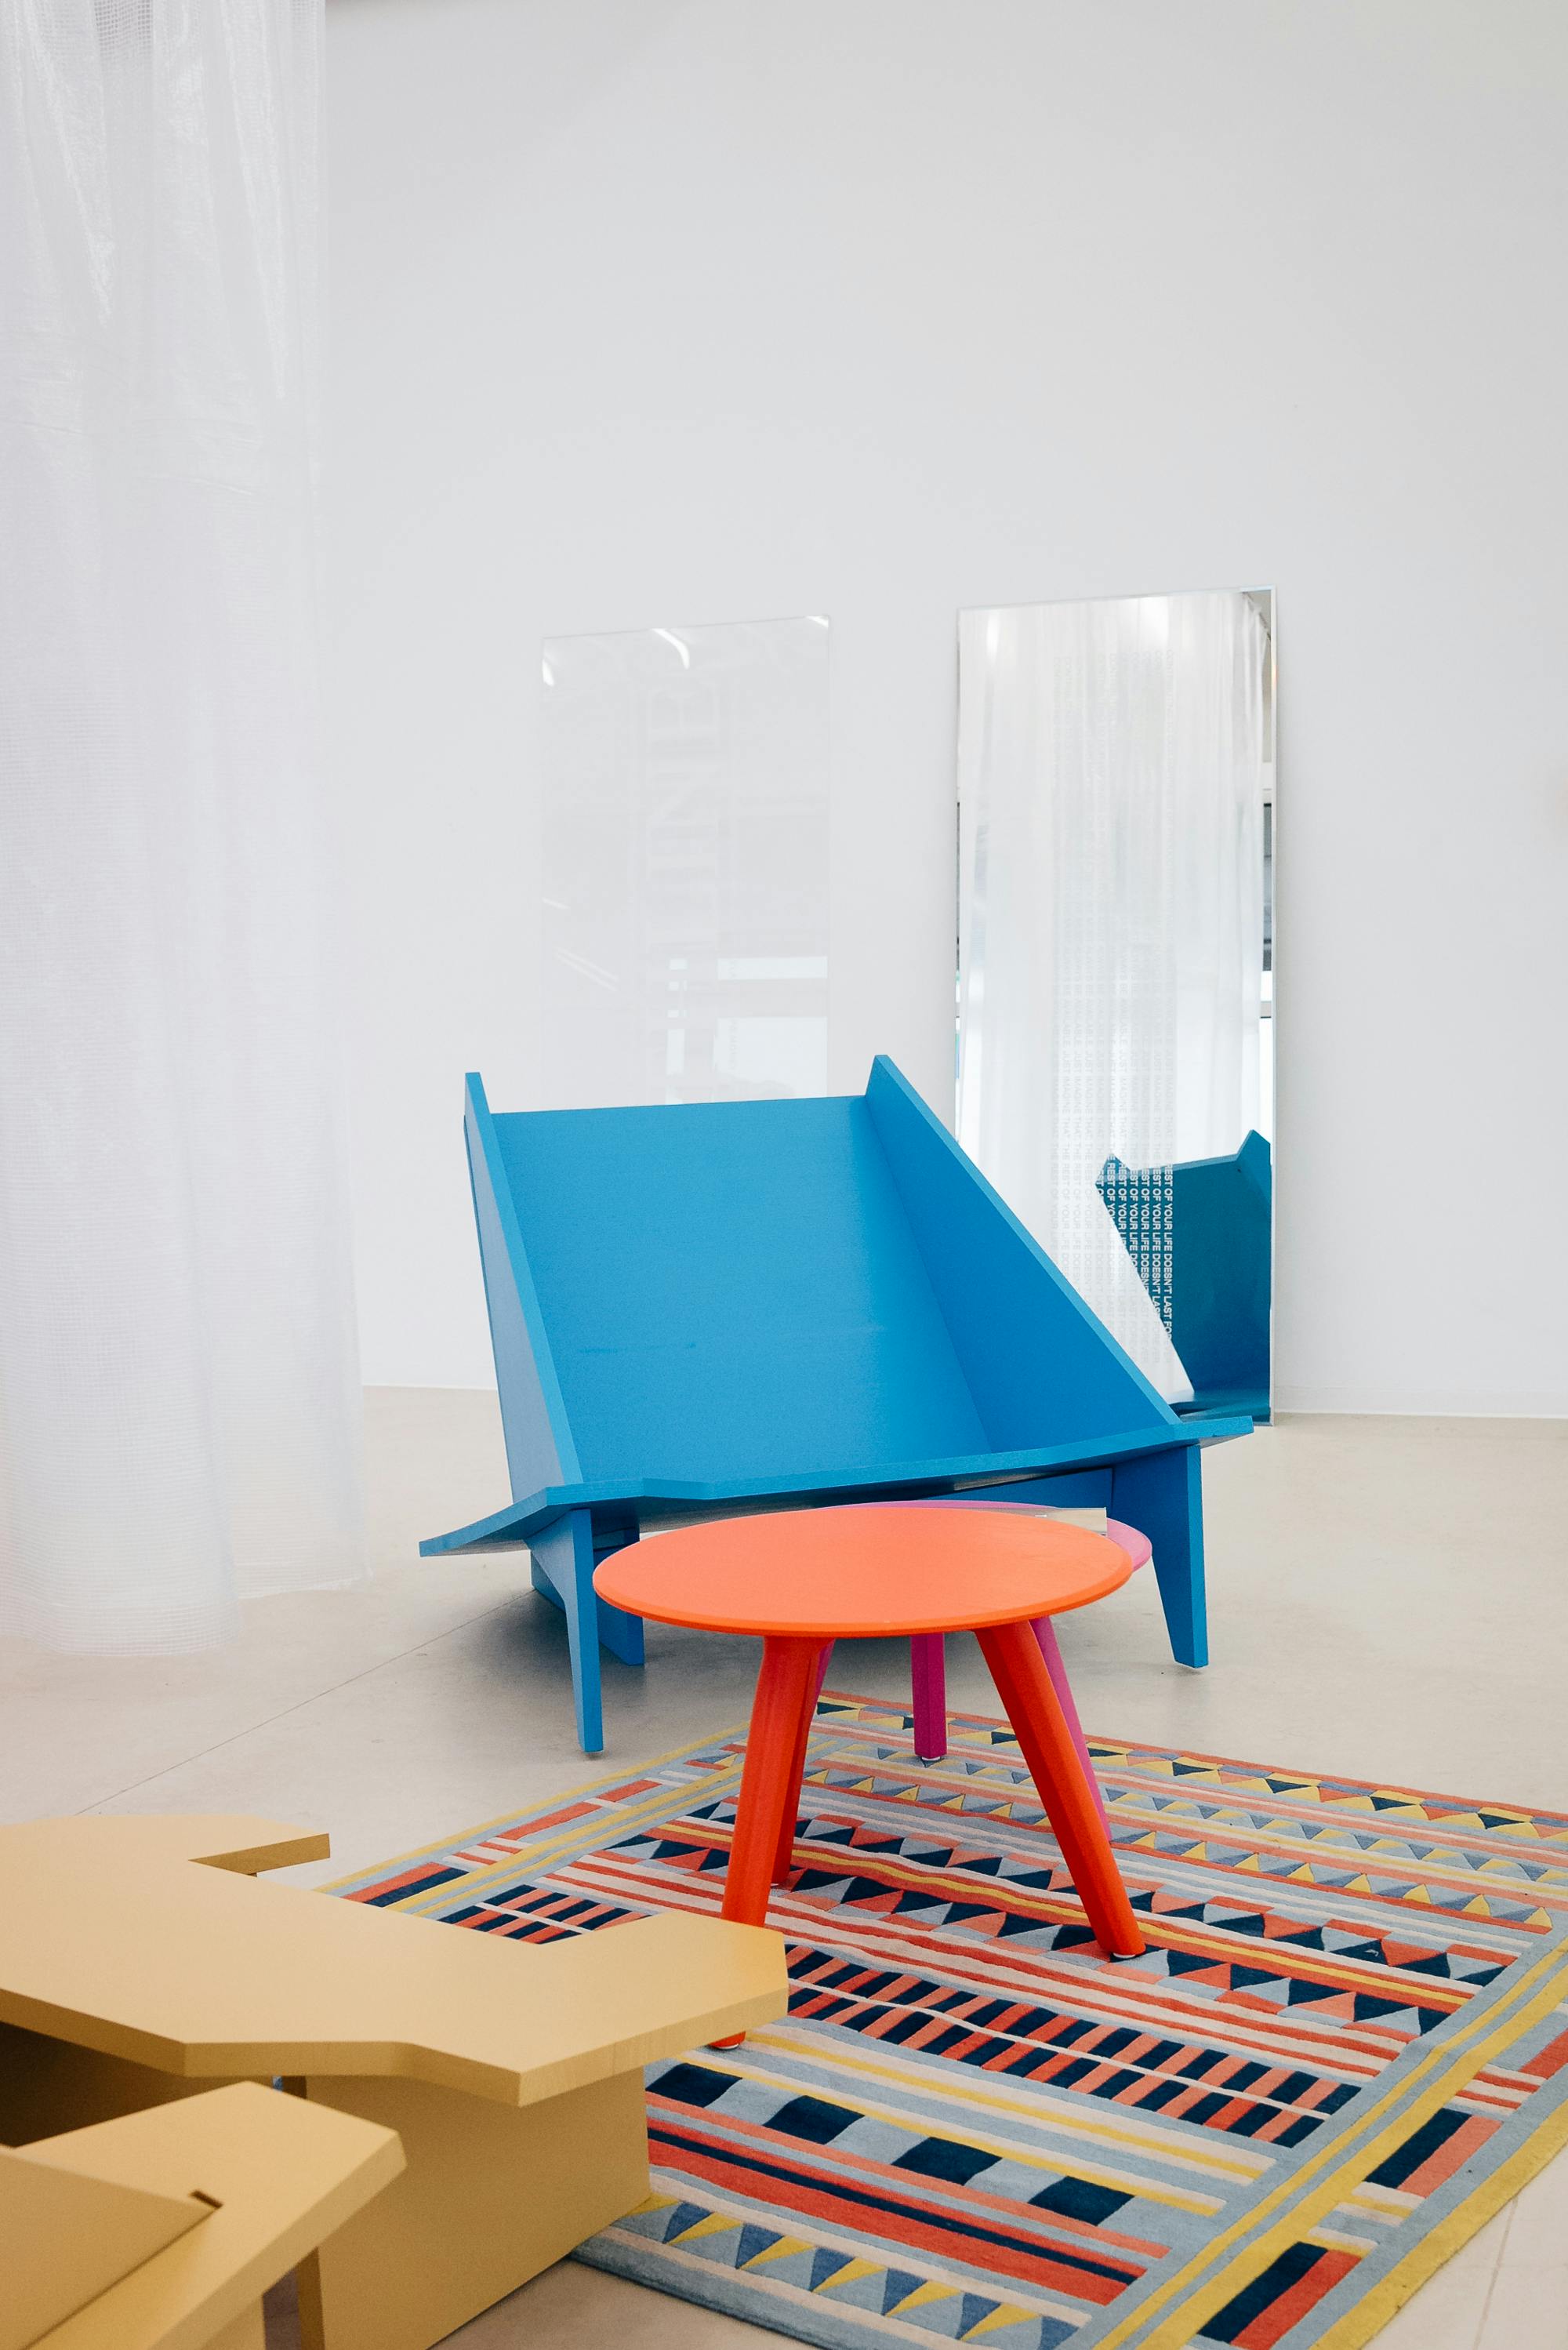 Möbeldesign – Made in Berlin #1: Objekte unserer Tage